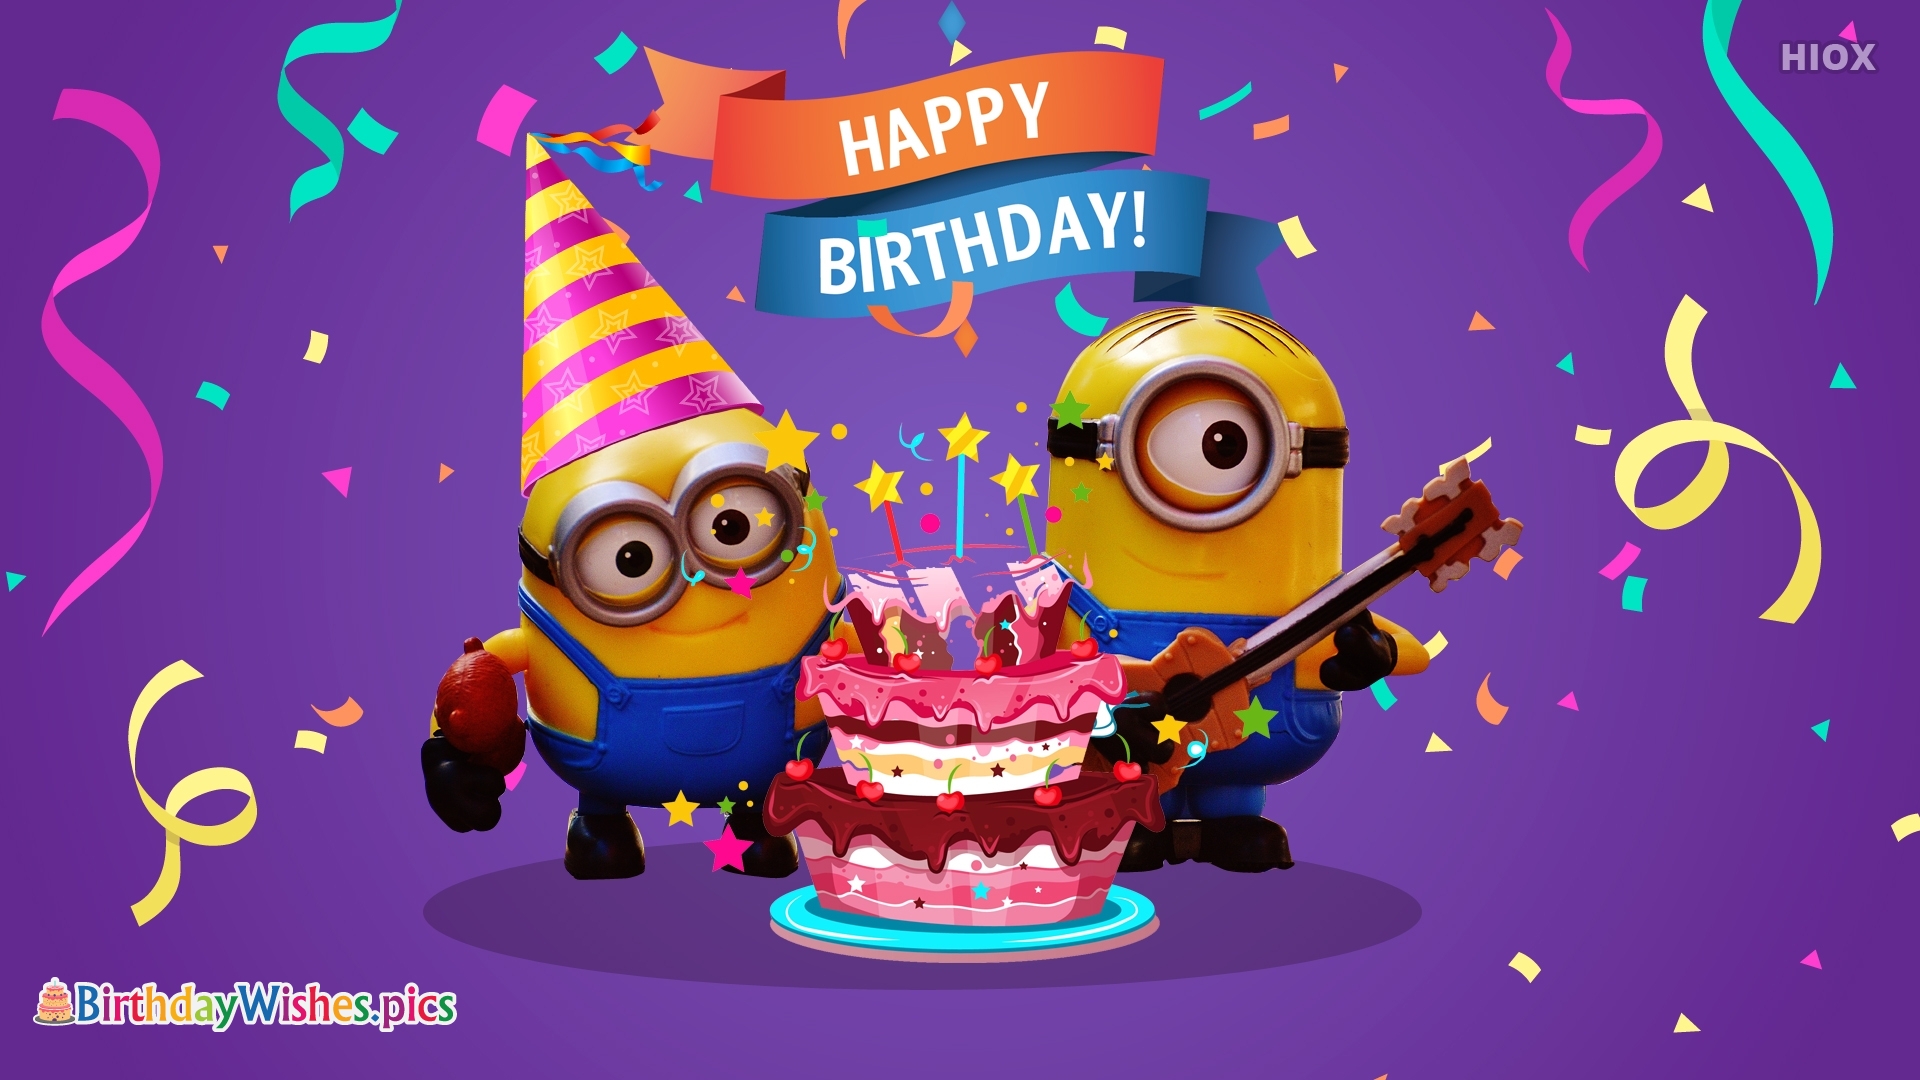 Birthday Wishes for Minions. Happy Birthday Minions Image